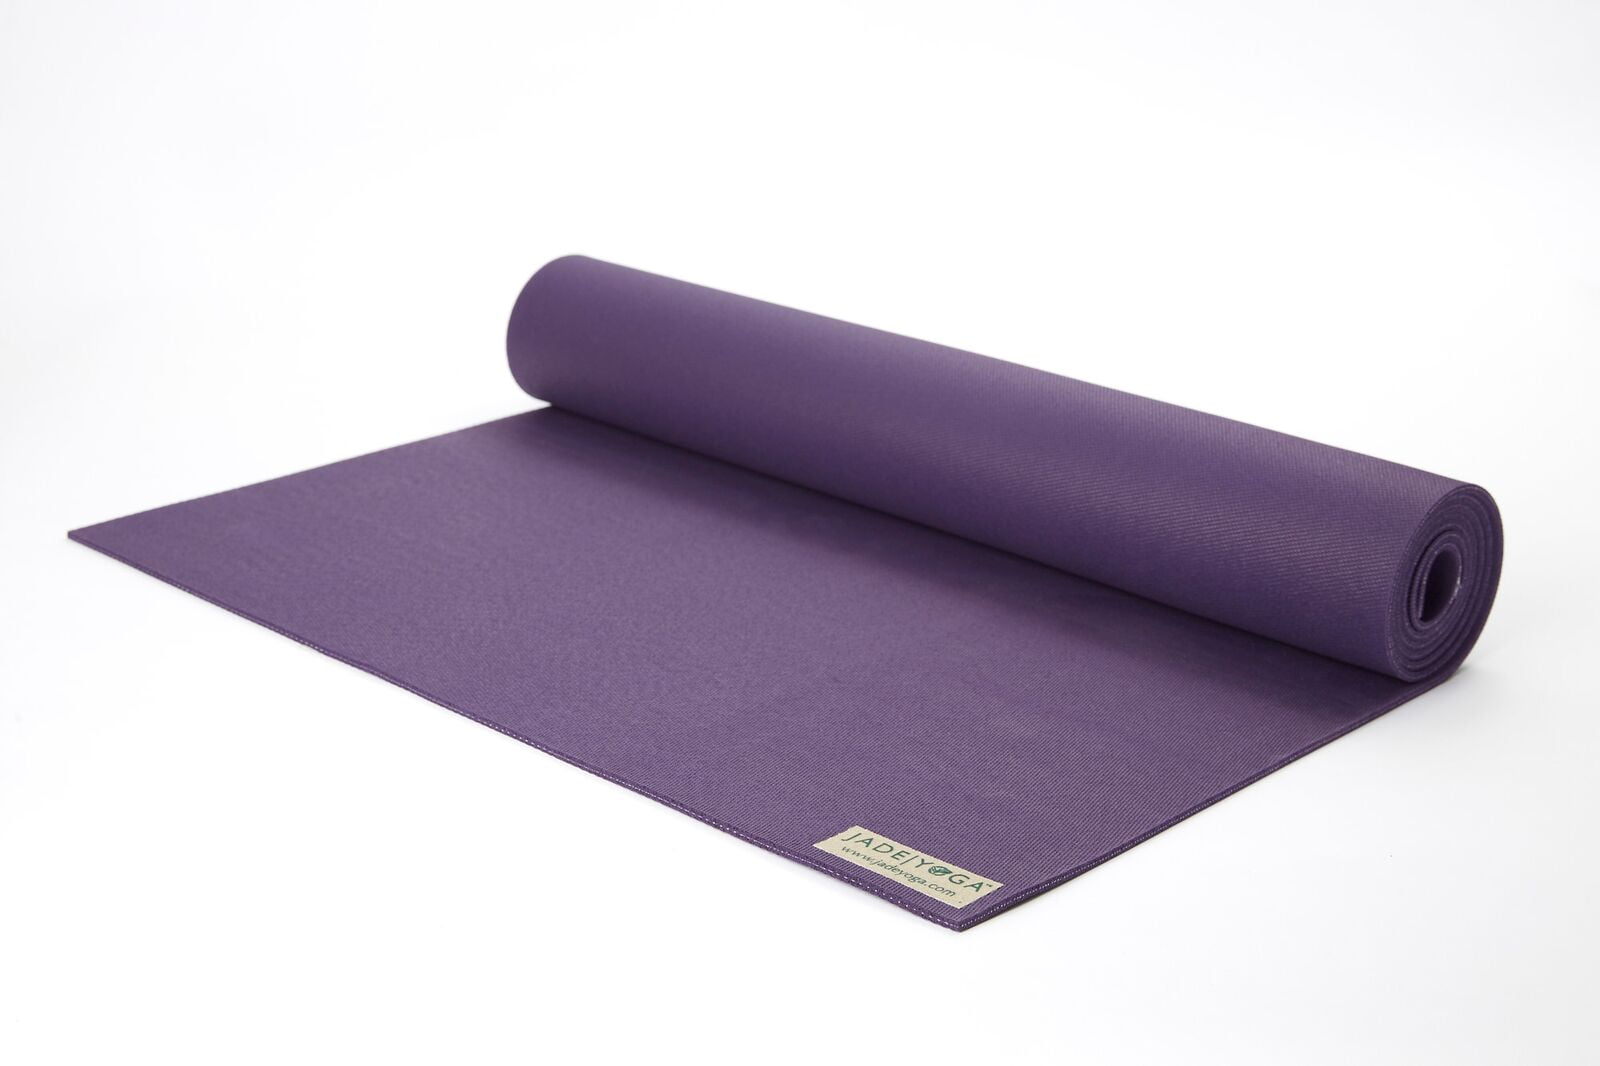 Jade 74-Inch by 1/8-Inch Travel Yoga Mat Purple